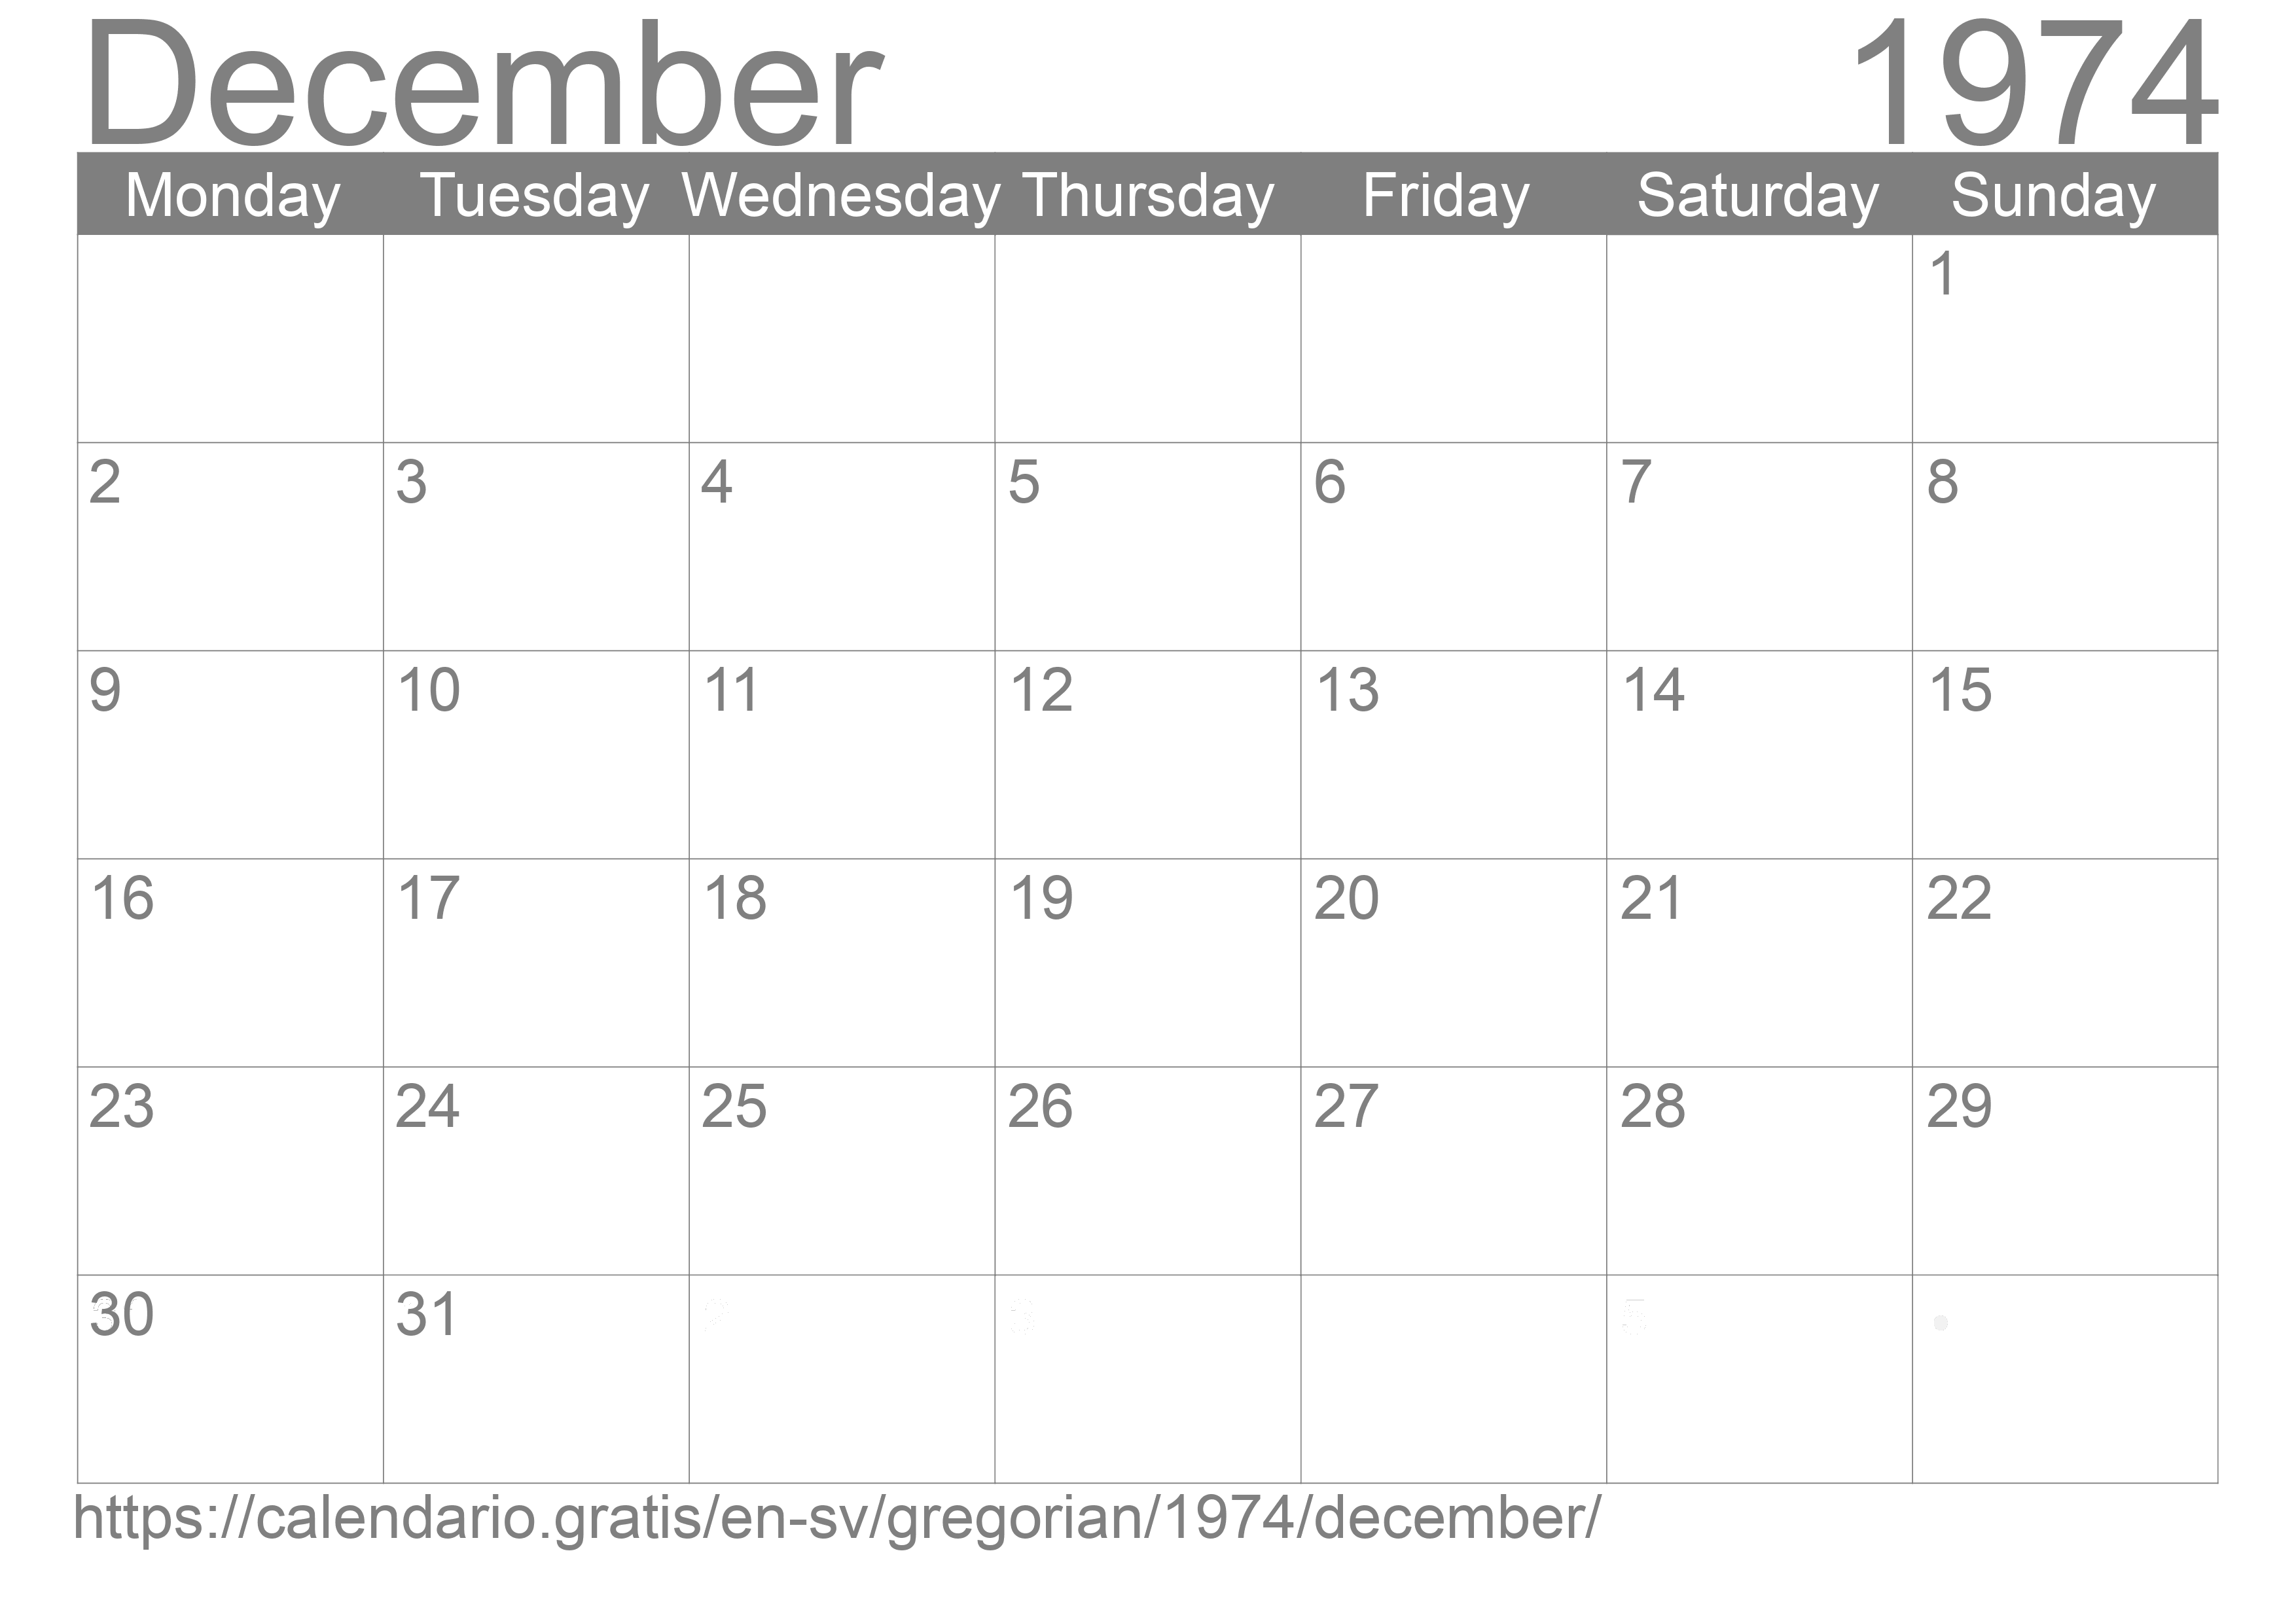 Calendar December 1974 to print